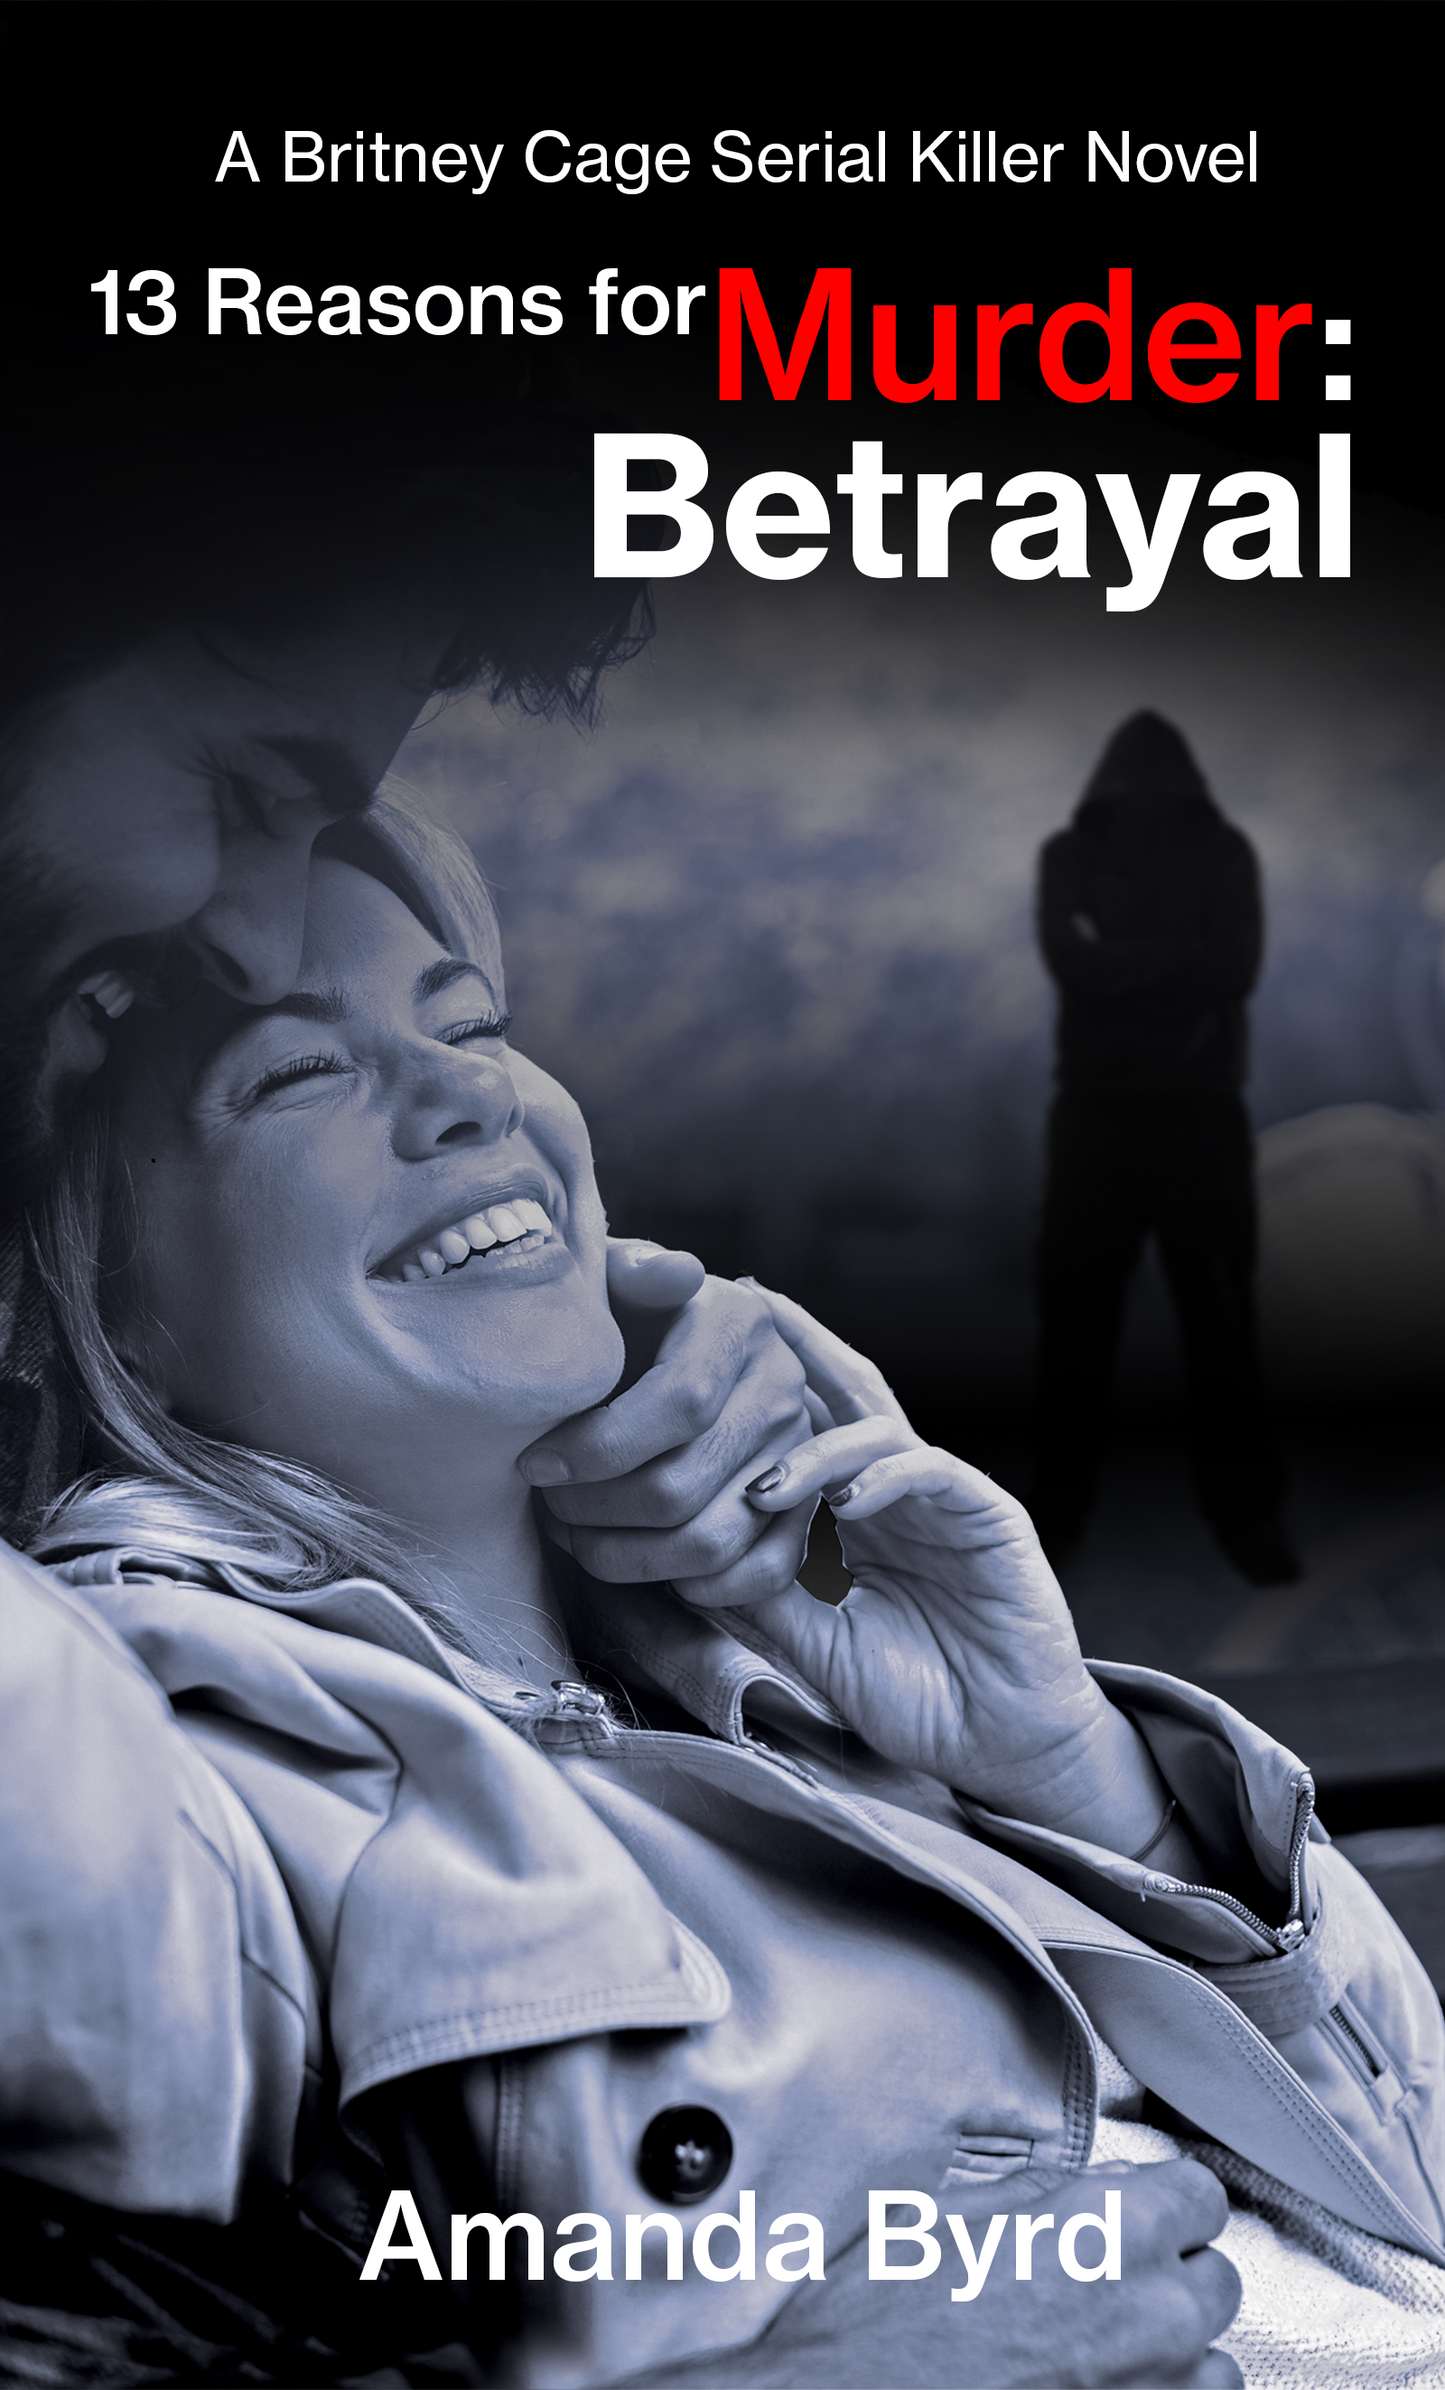 (#6) 13 Reasons for Murder: Betrayal